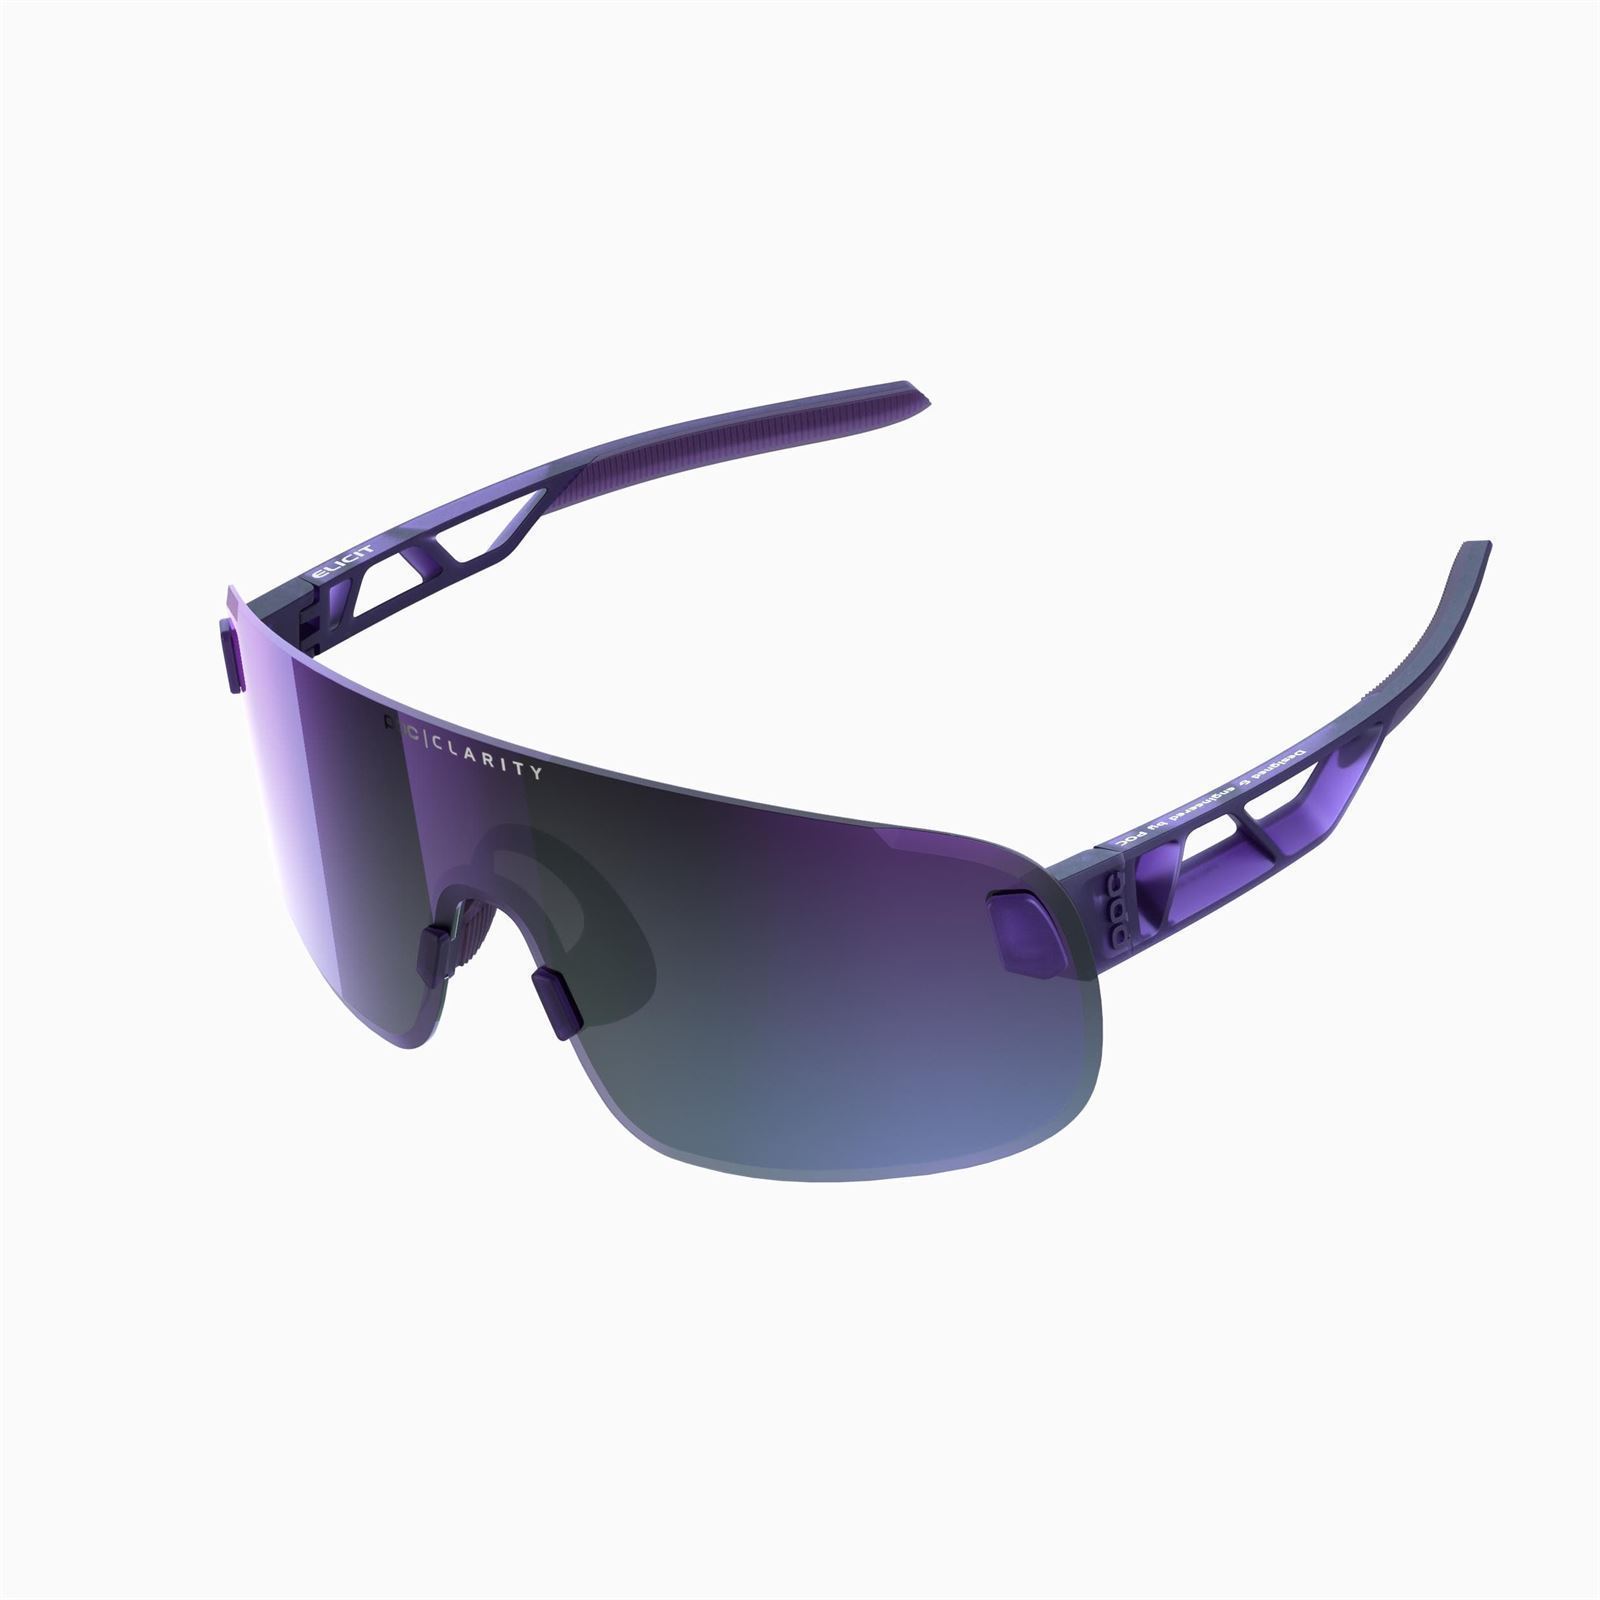 Gafas POC ELICIT "Sapphire Purple Translucent / Lente: Clarity Define Violet Mirror" - SUPER PRECIO!!!! - Imagen 1